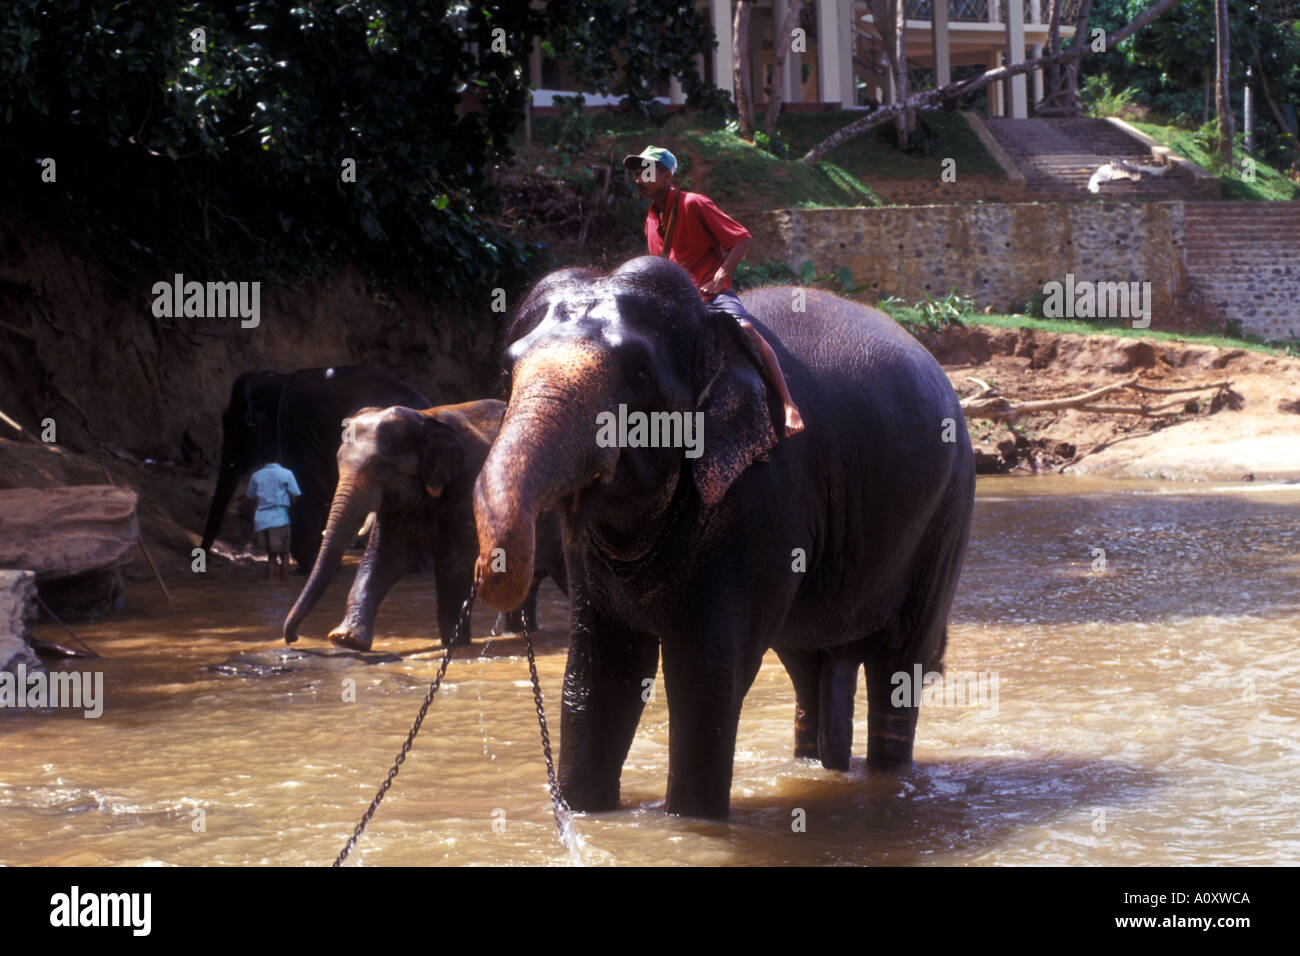 Elephants at the Pinnawela Elephant Sanctuary in Sri Lanka. Stock Photo